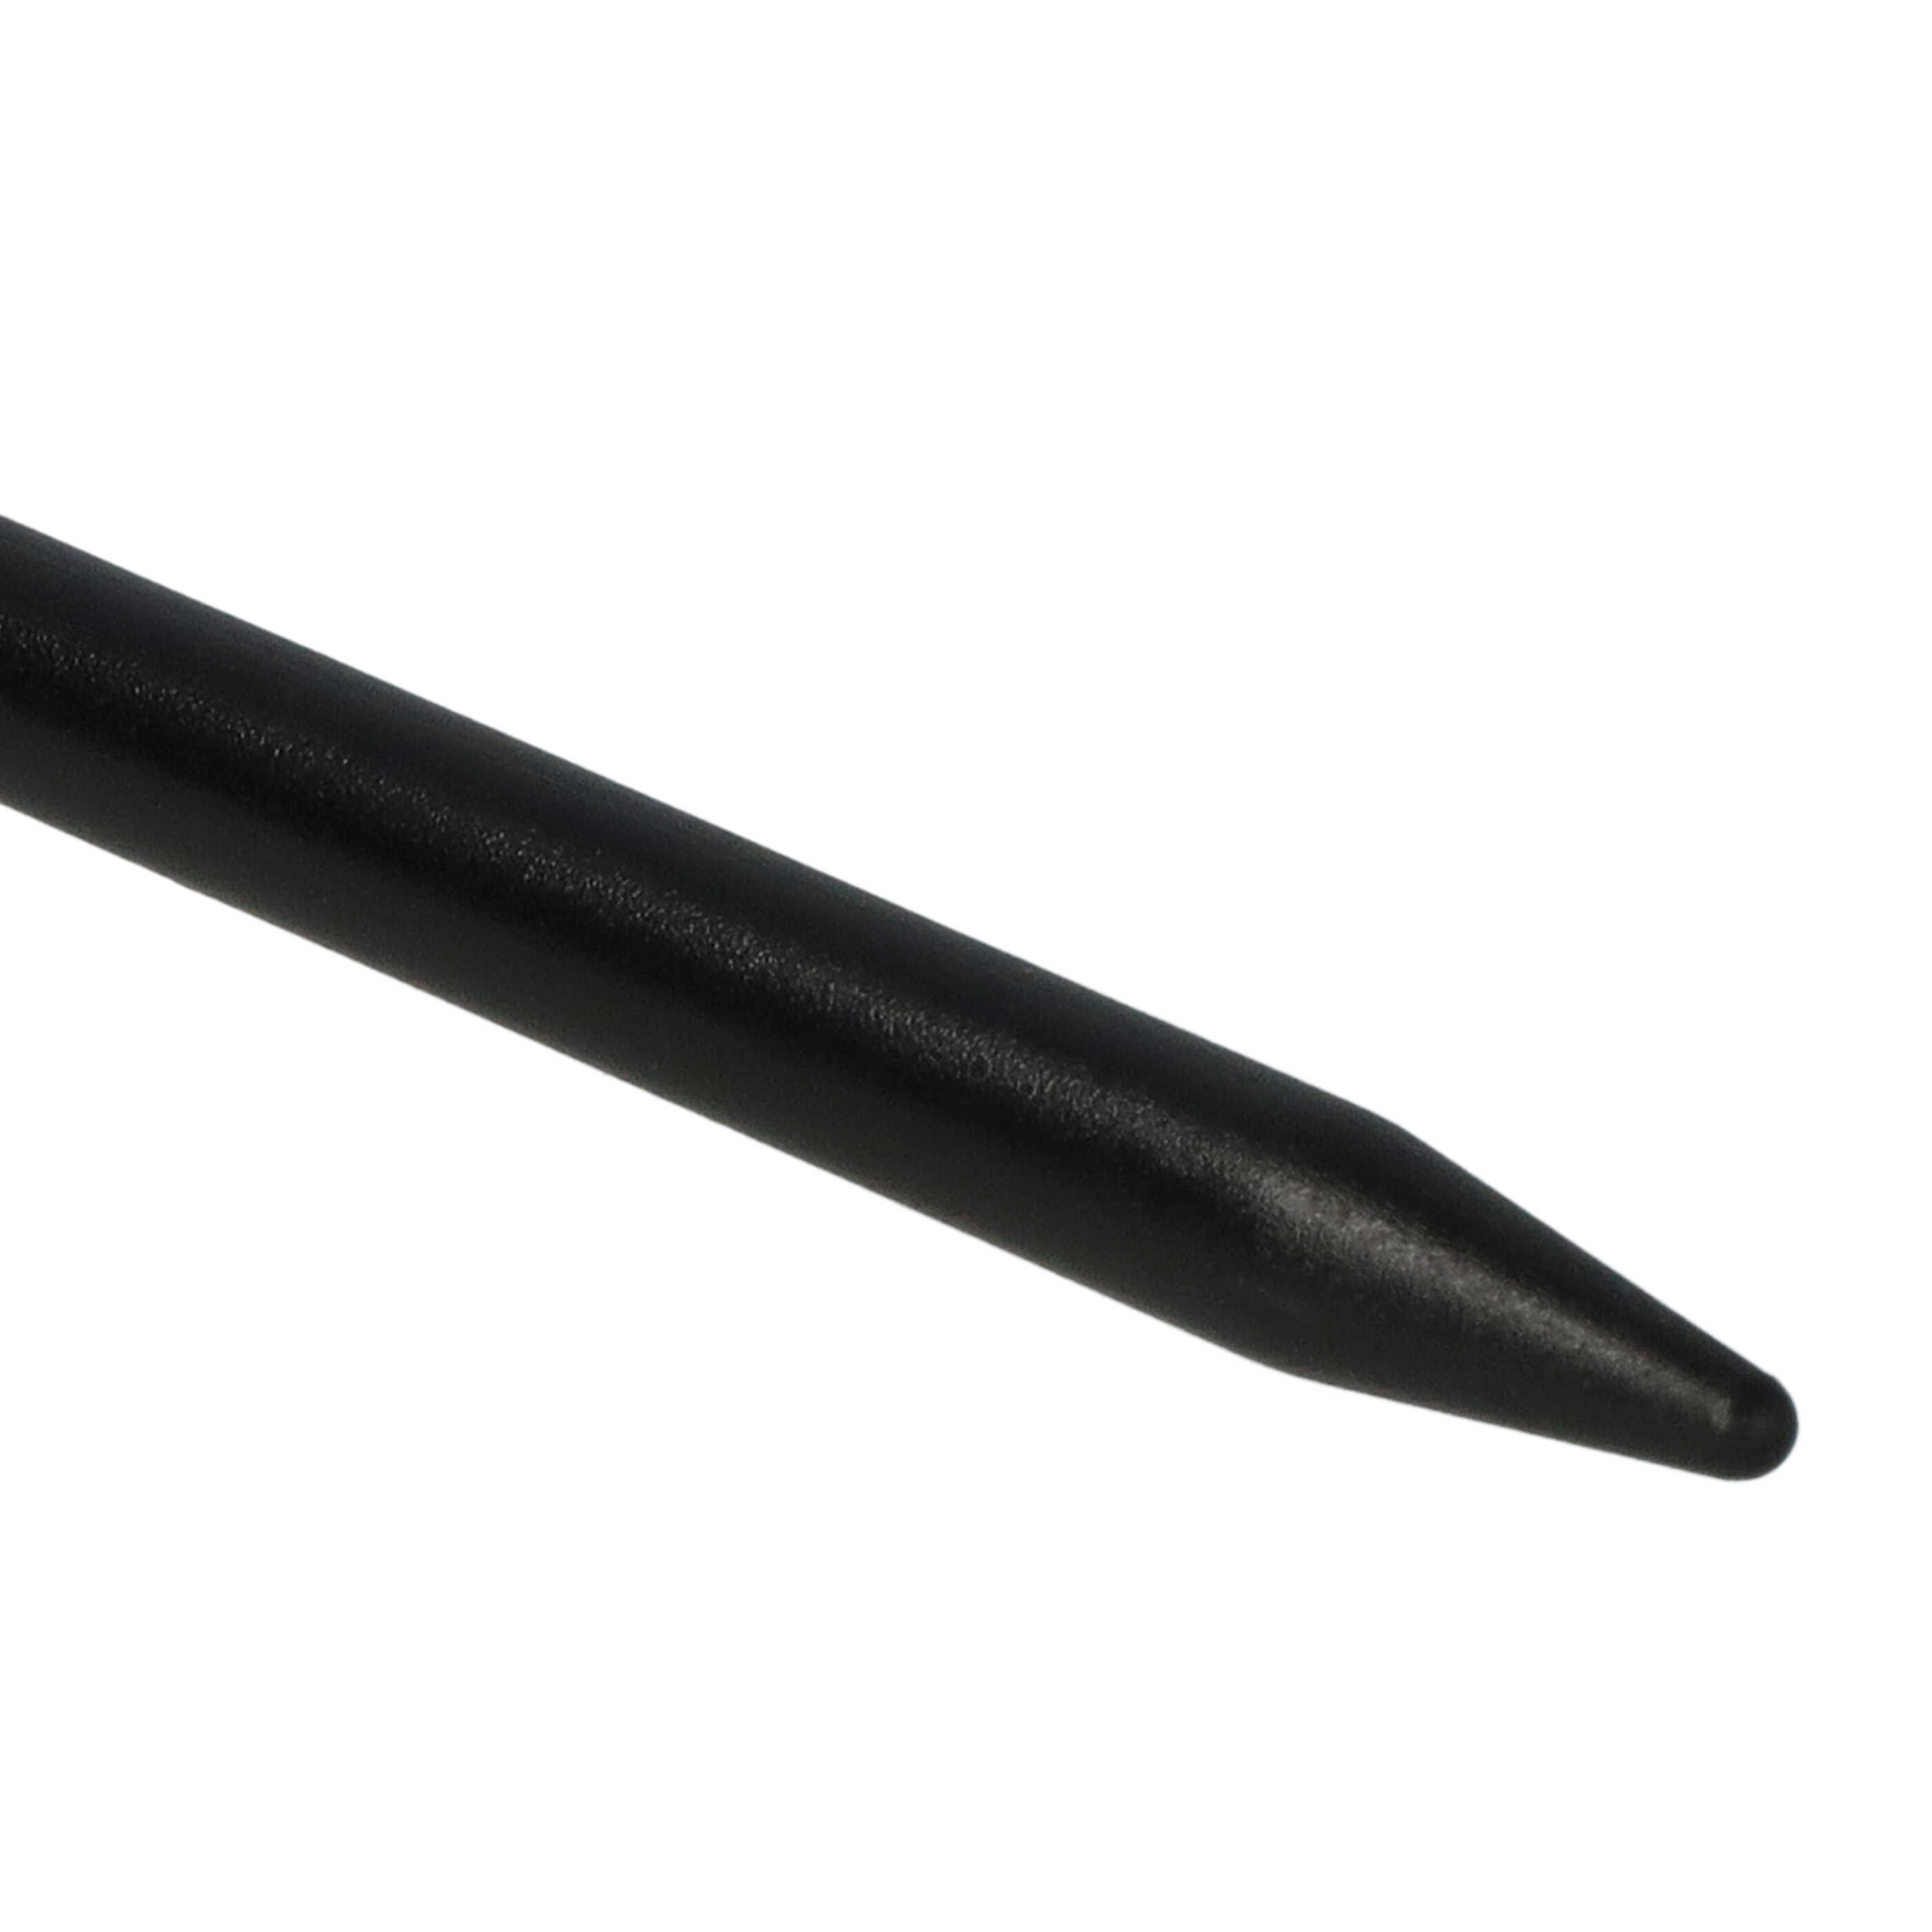 10x Rysik touch pen do konsoli Nintendo 3DS - czarny